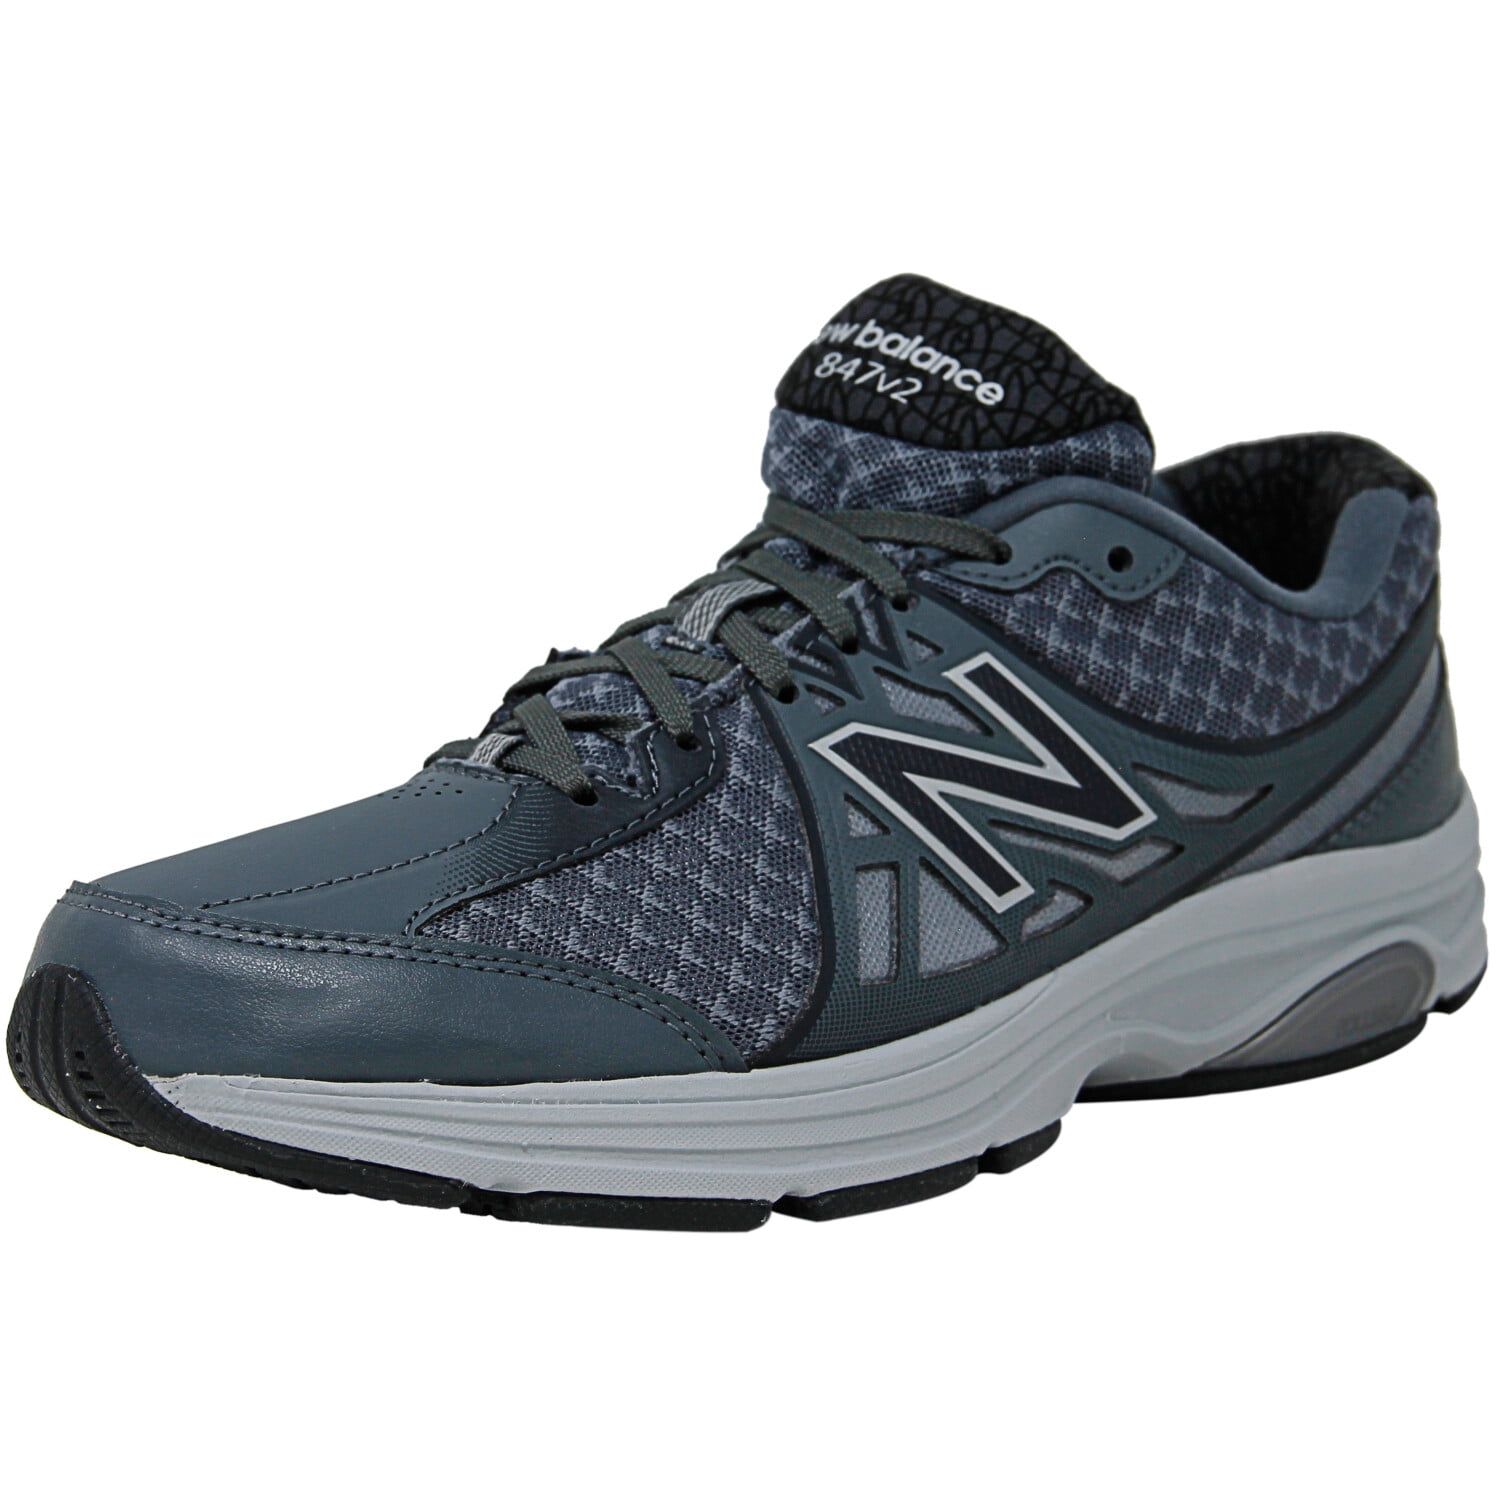 New Balance MW847 Walking Shoe - 7N - Gy2 - Walmart.com